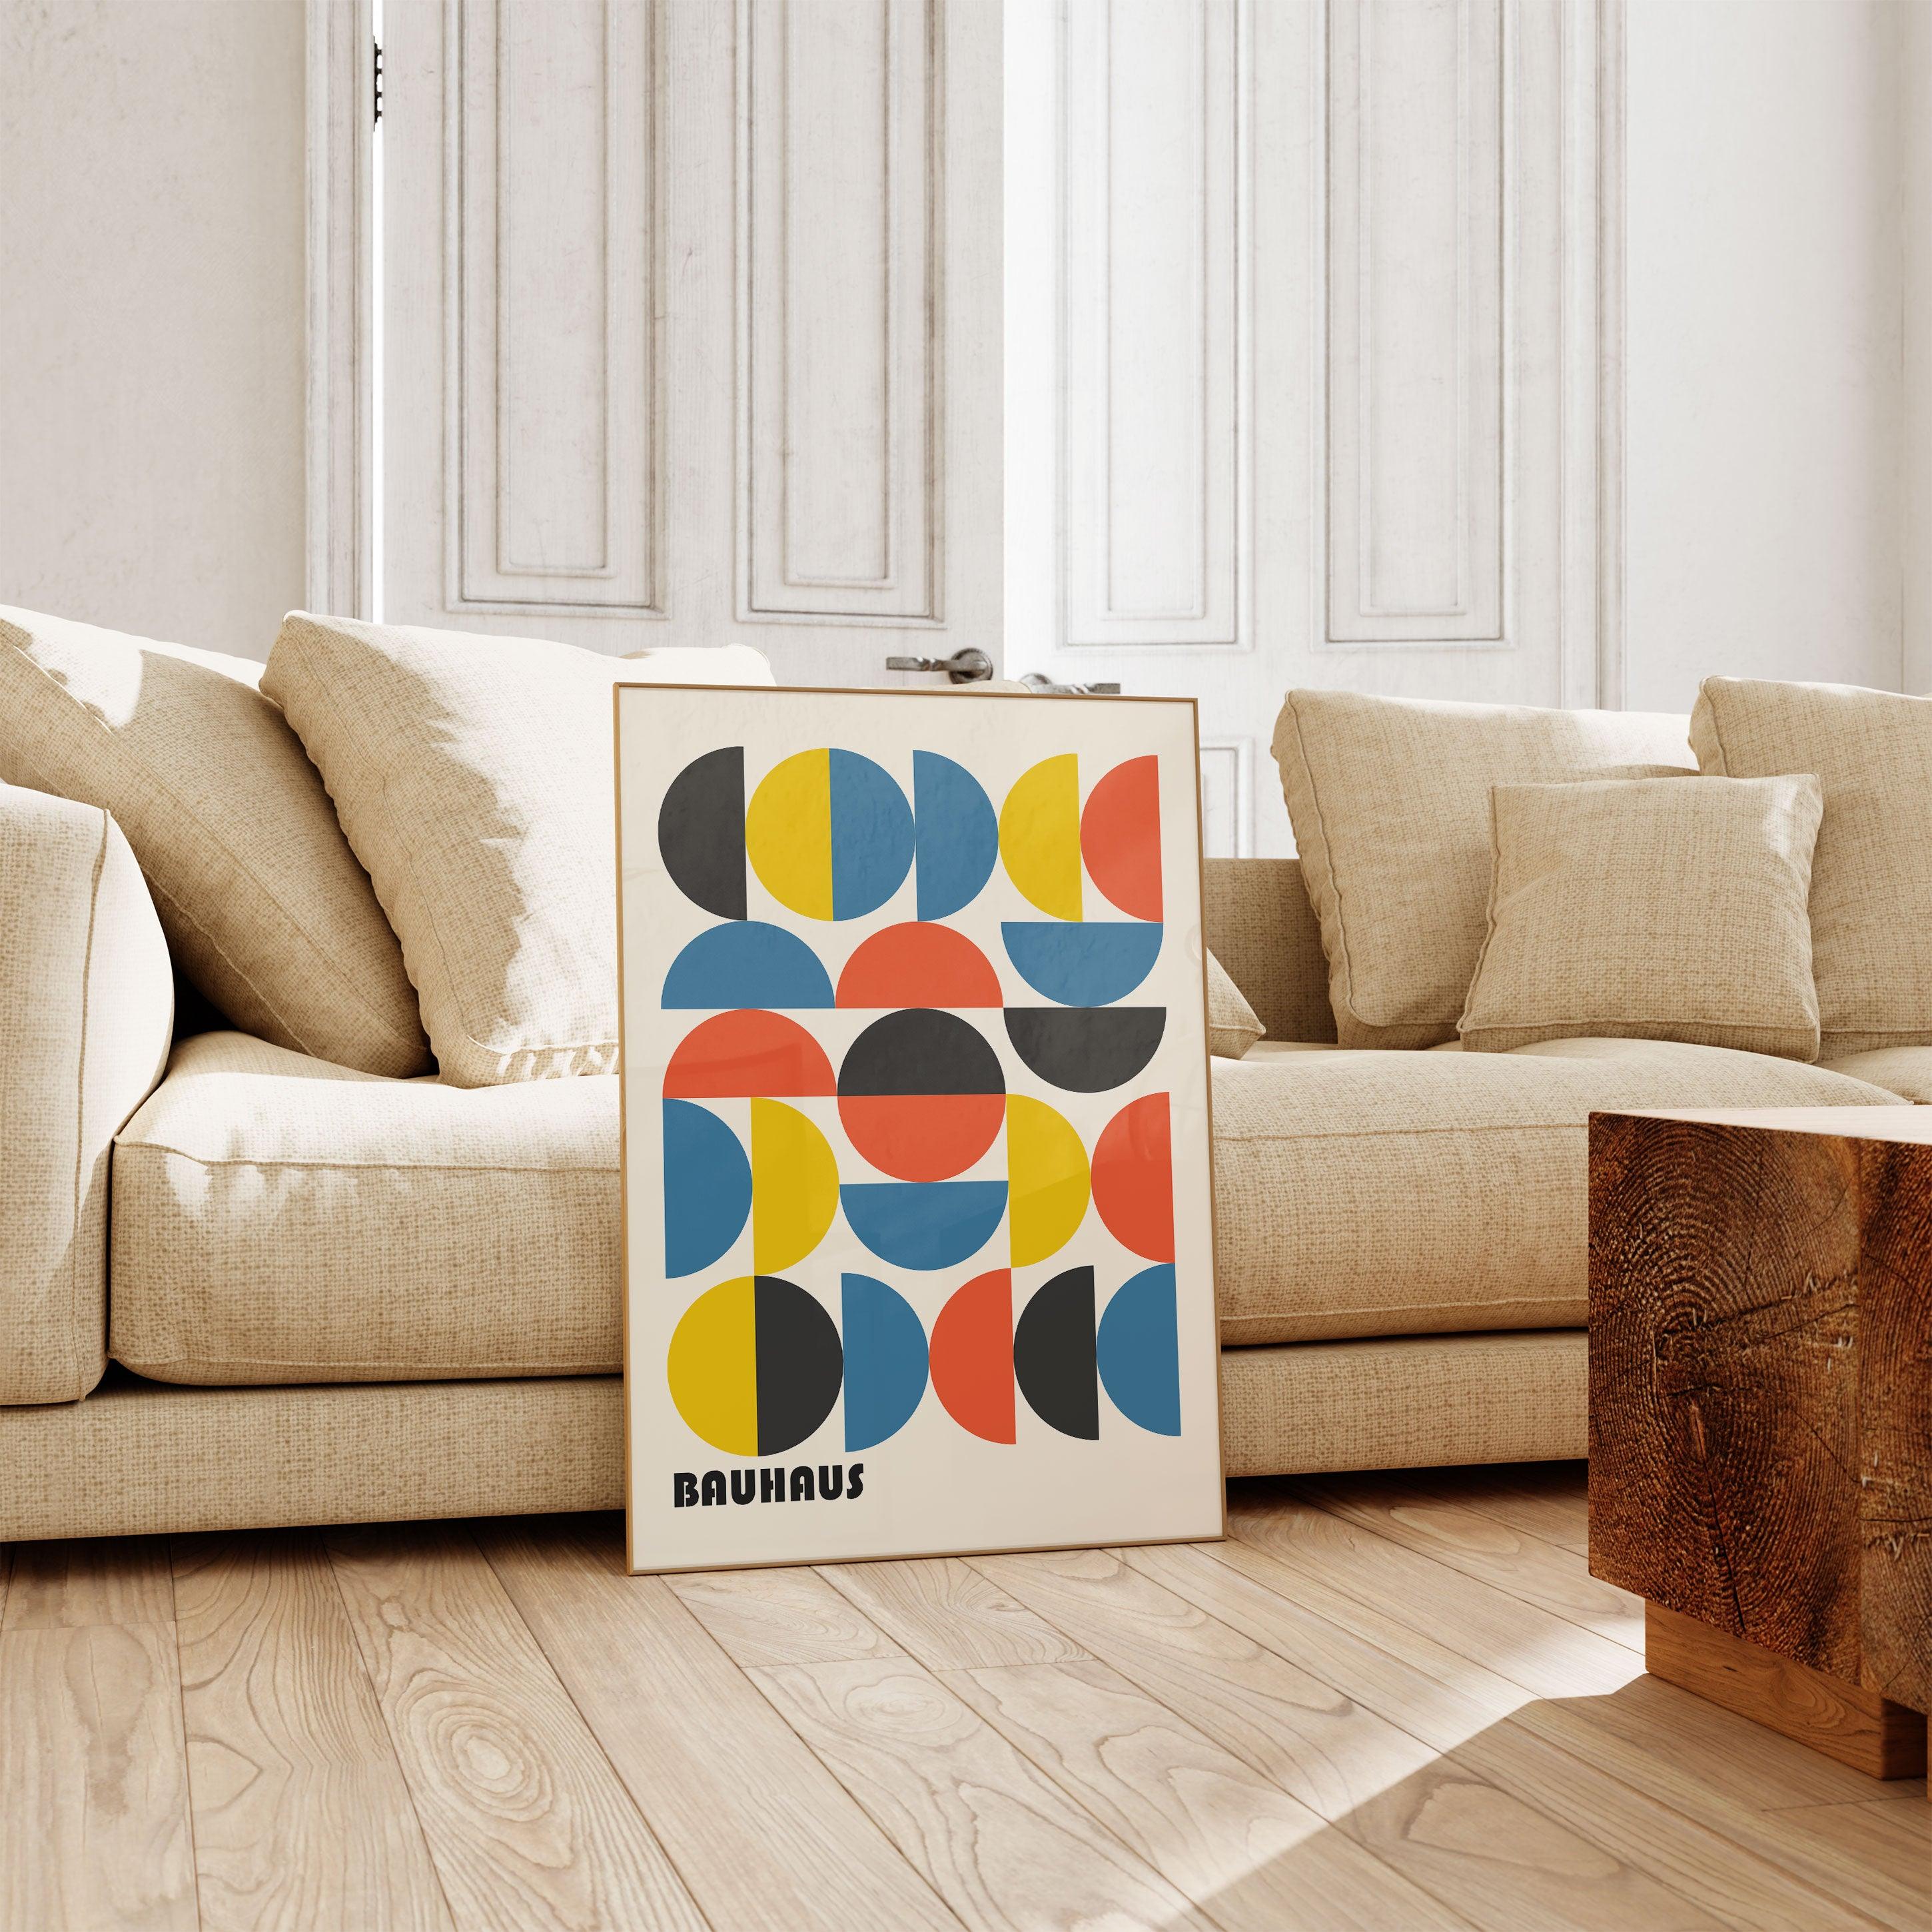 Bauhaus Multi Colour Semicircles No2 - stravee - Wall Art Print